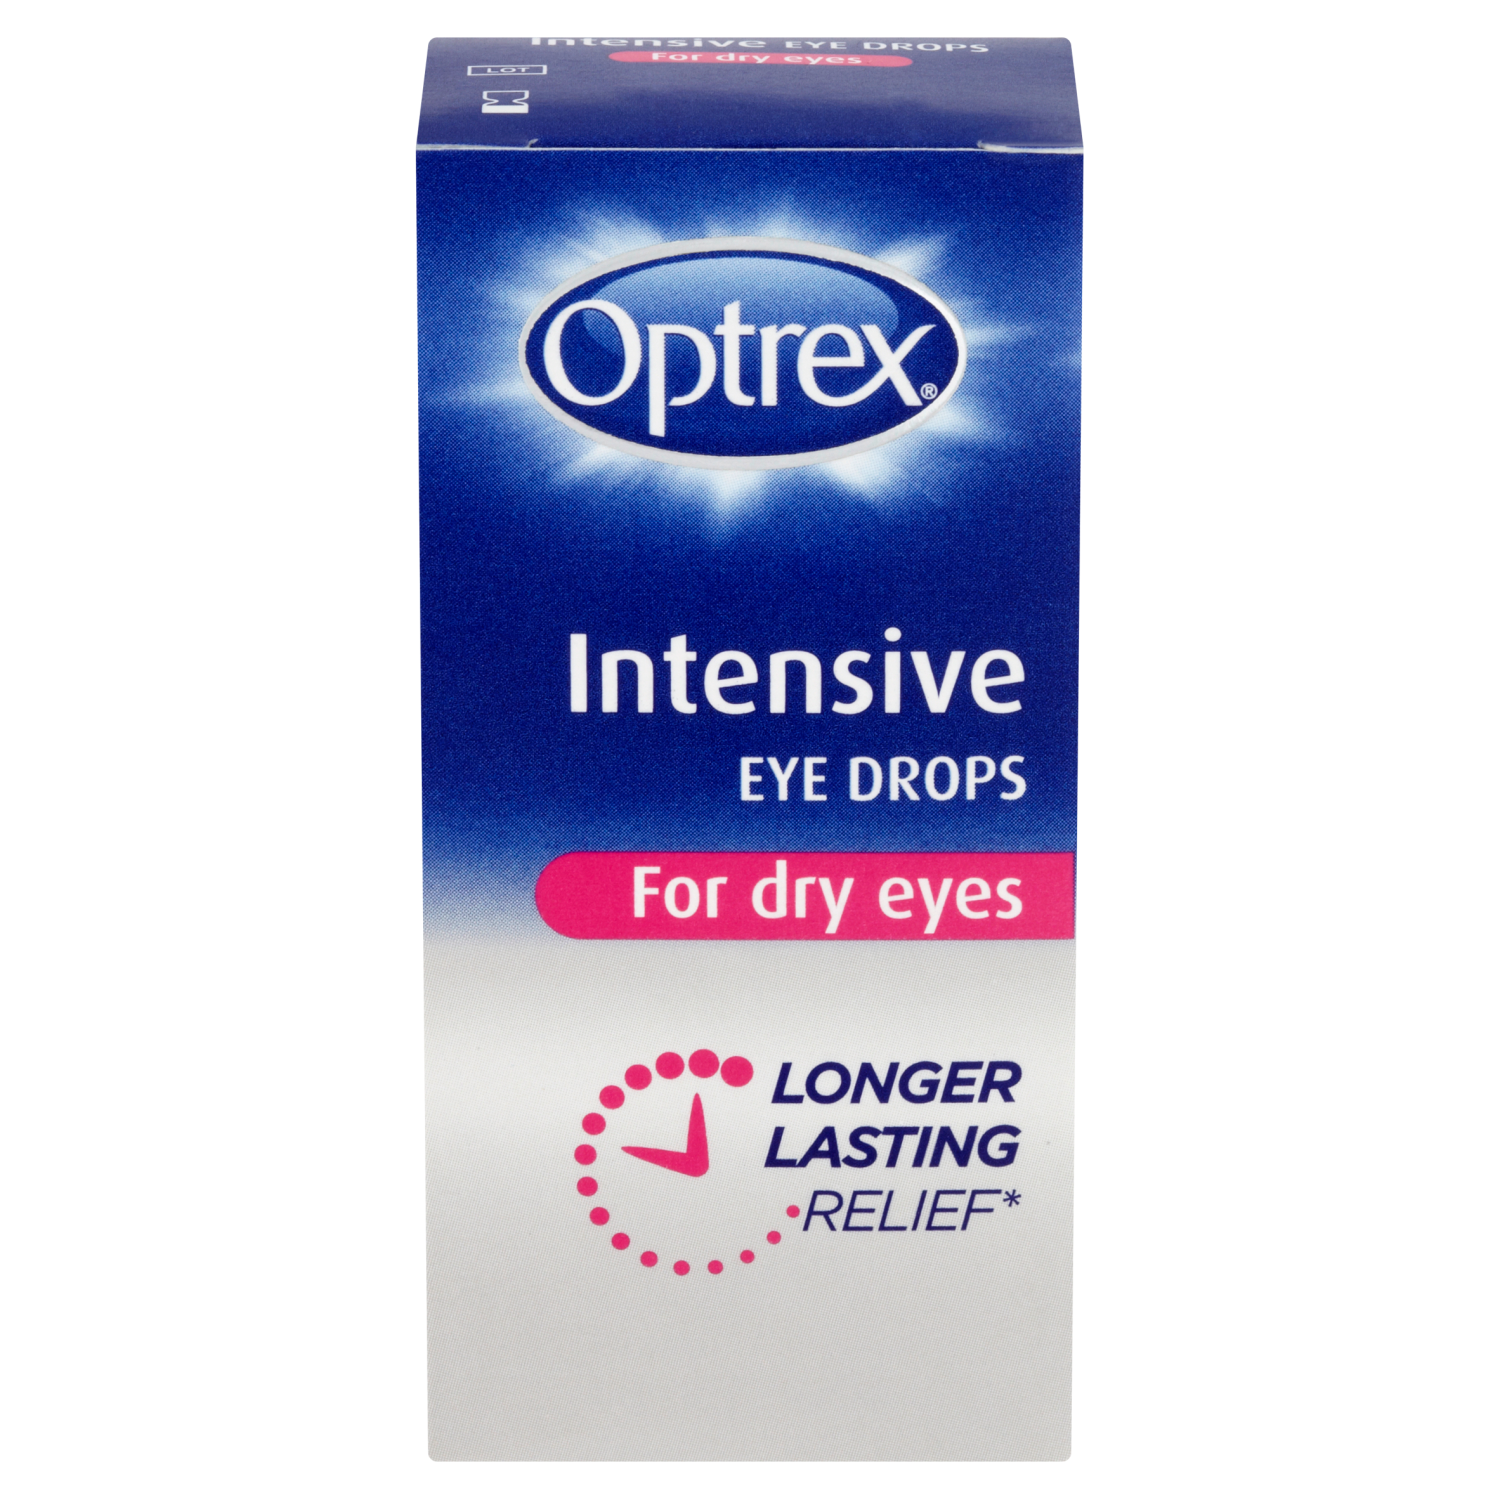 Optrex Intensive Eye Drops for Dry Eyes 10mllll